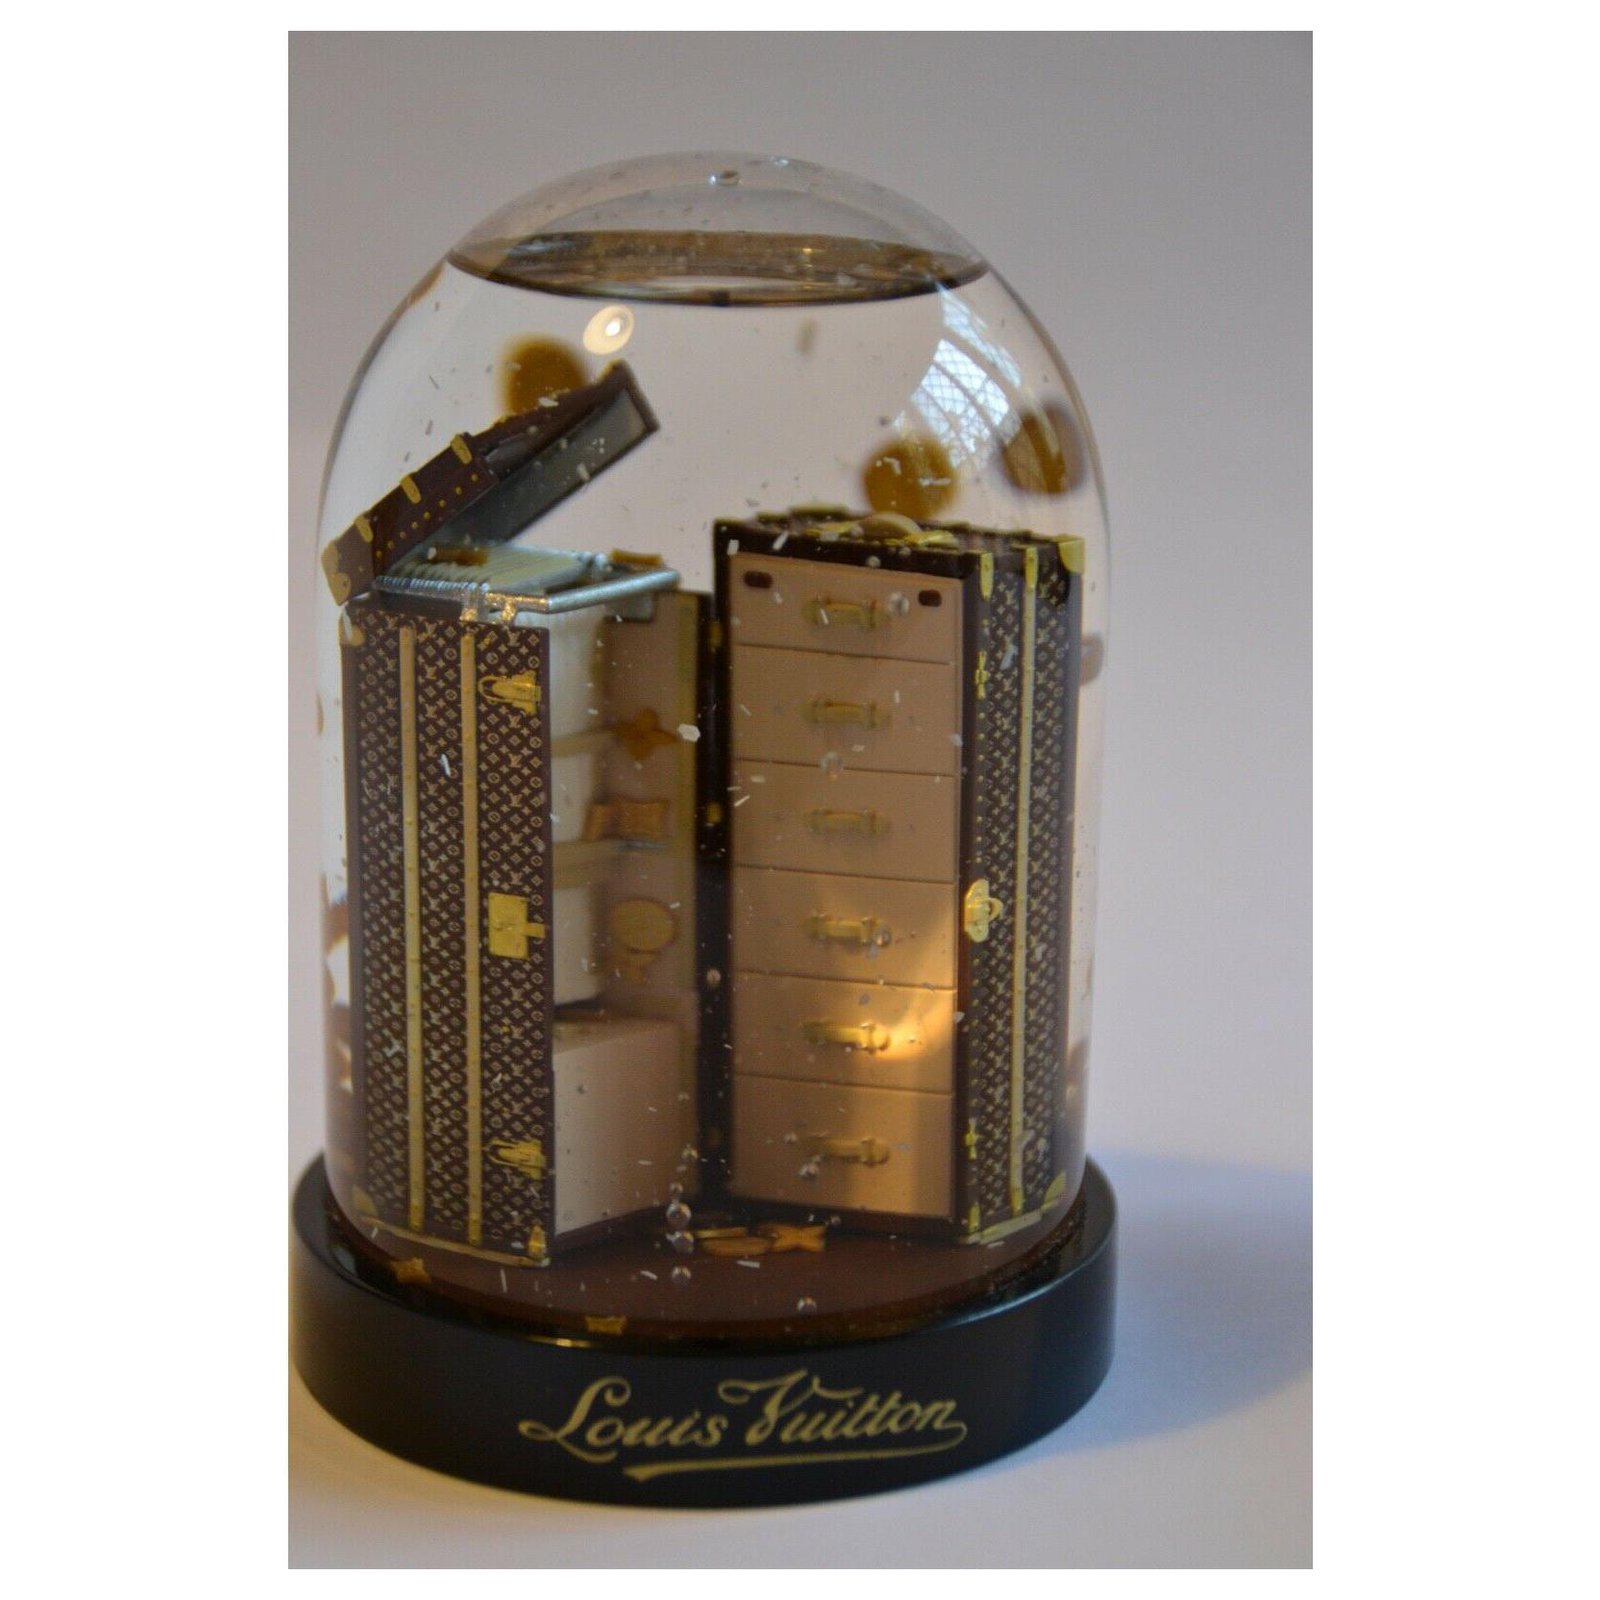 Snowball Louis Vuitton Gold in Glass - 13067923